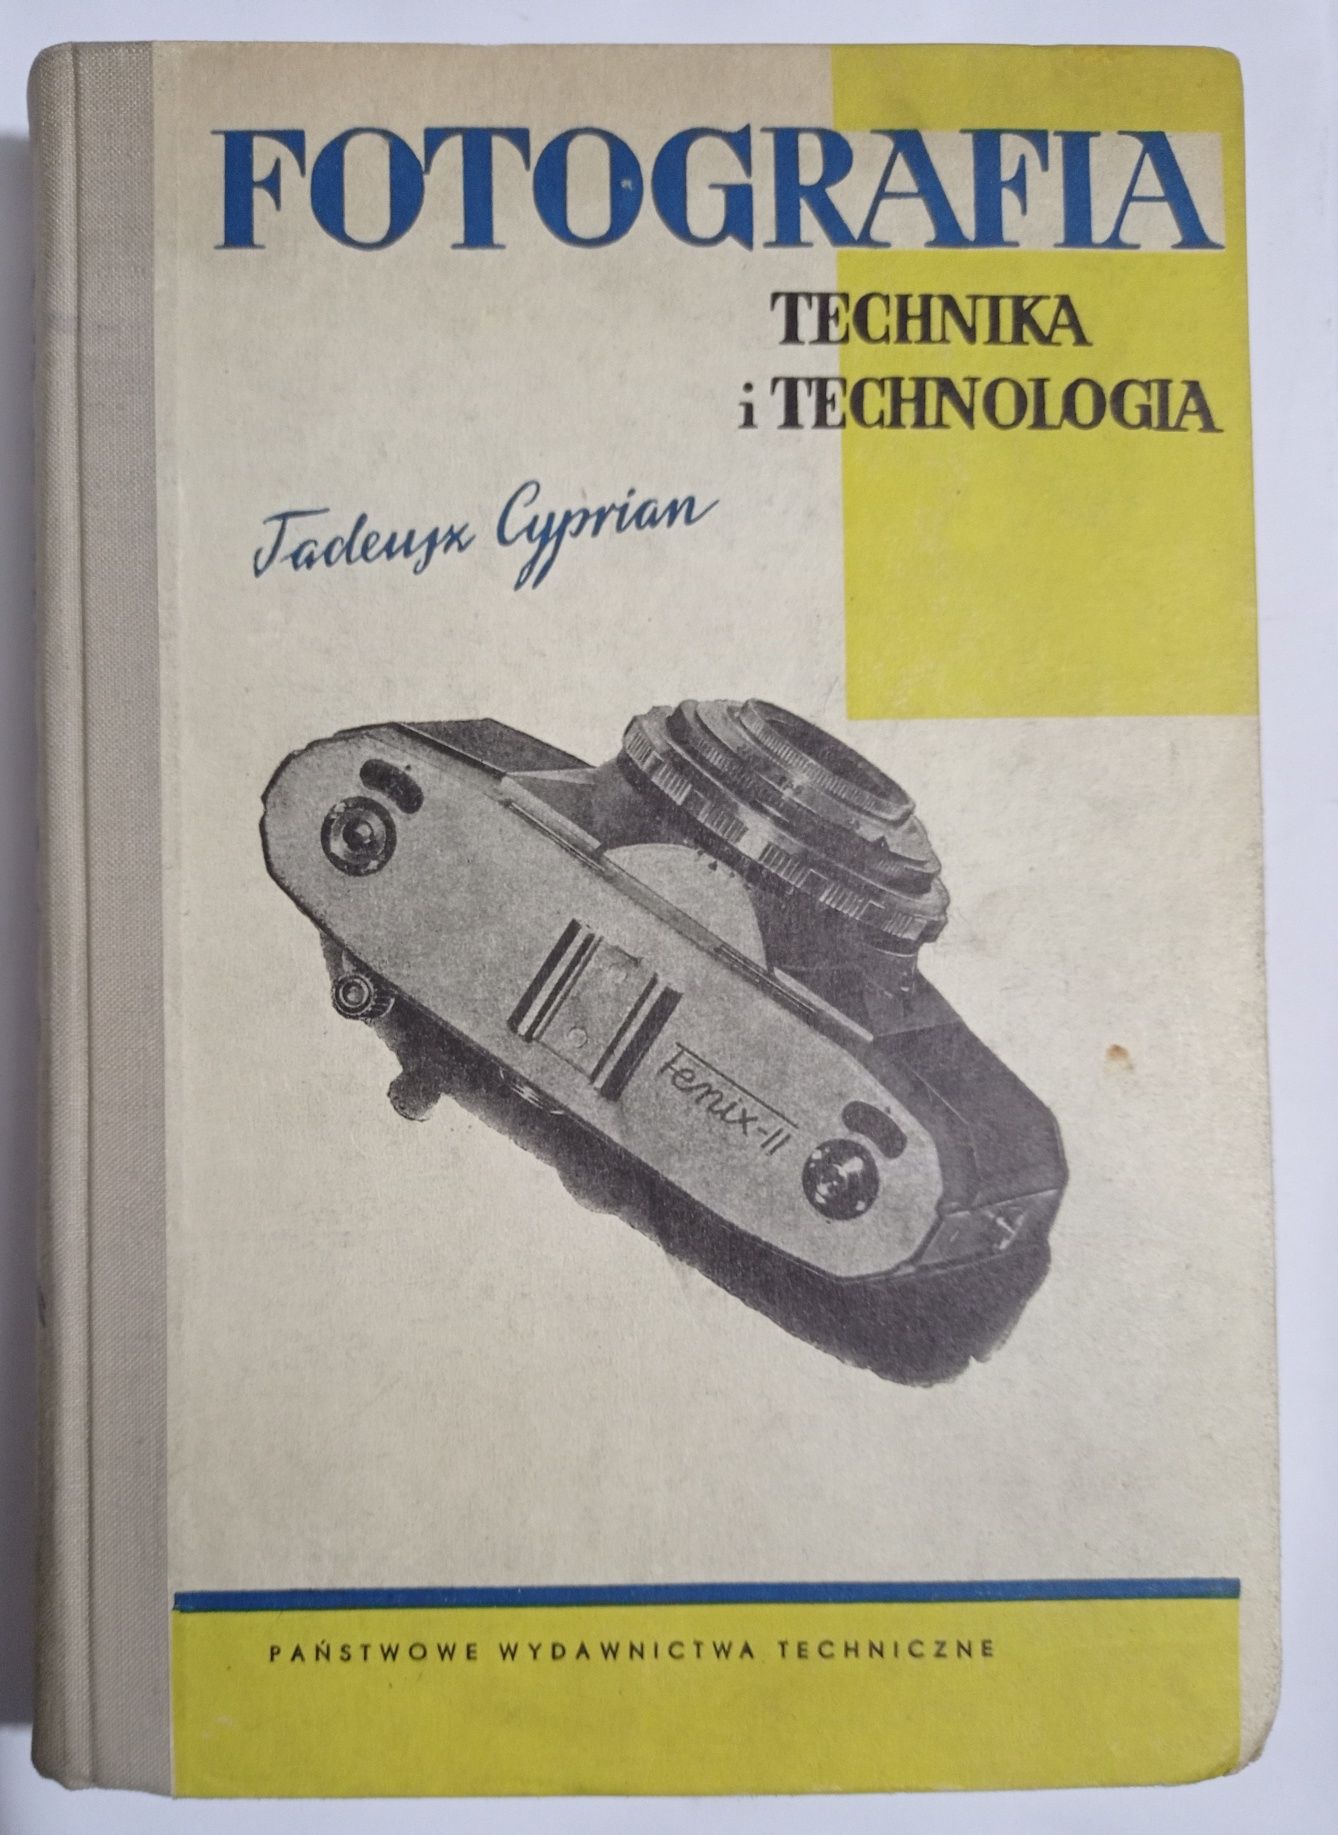 Fotografia technika i technologia Tadeusz cyprian